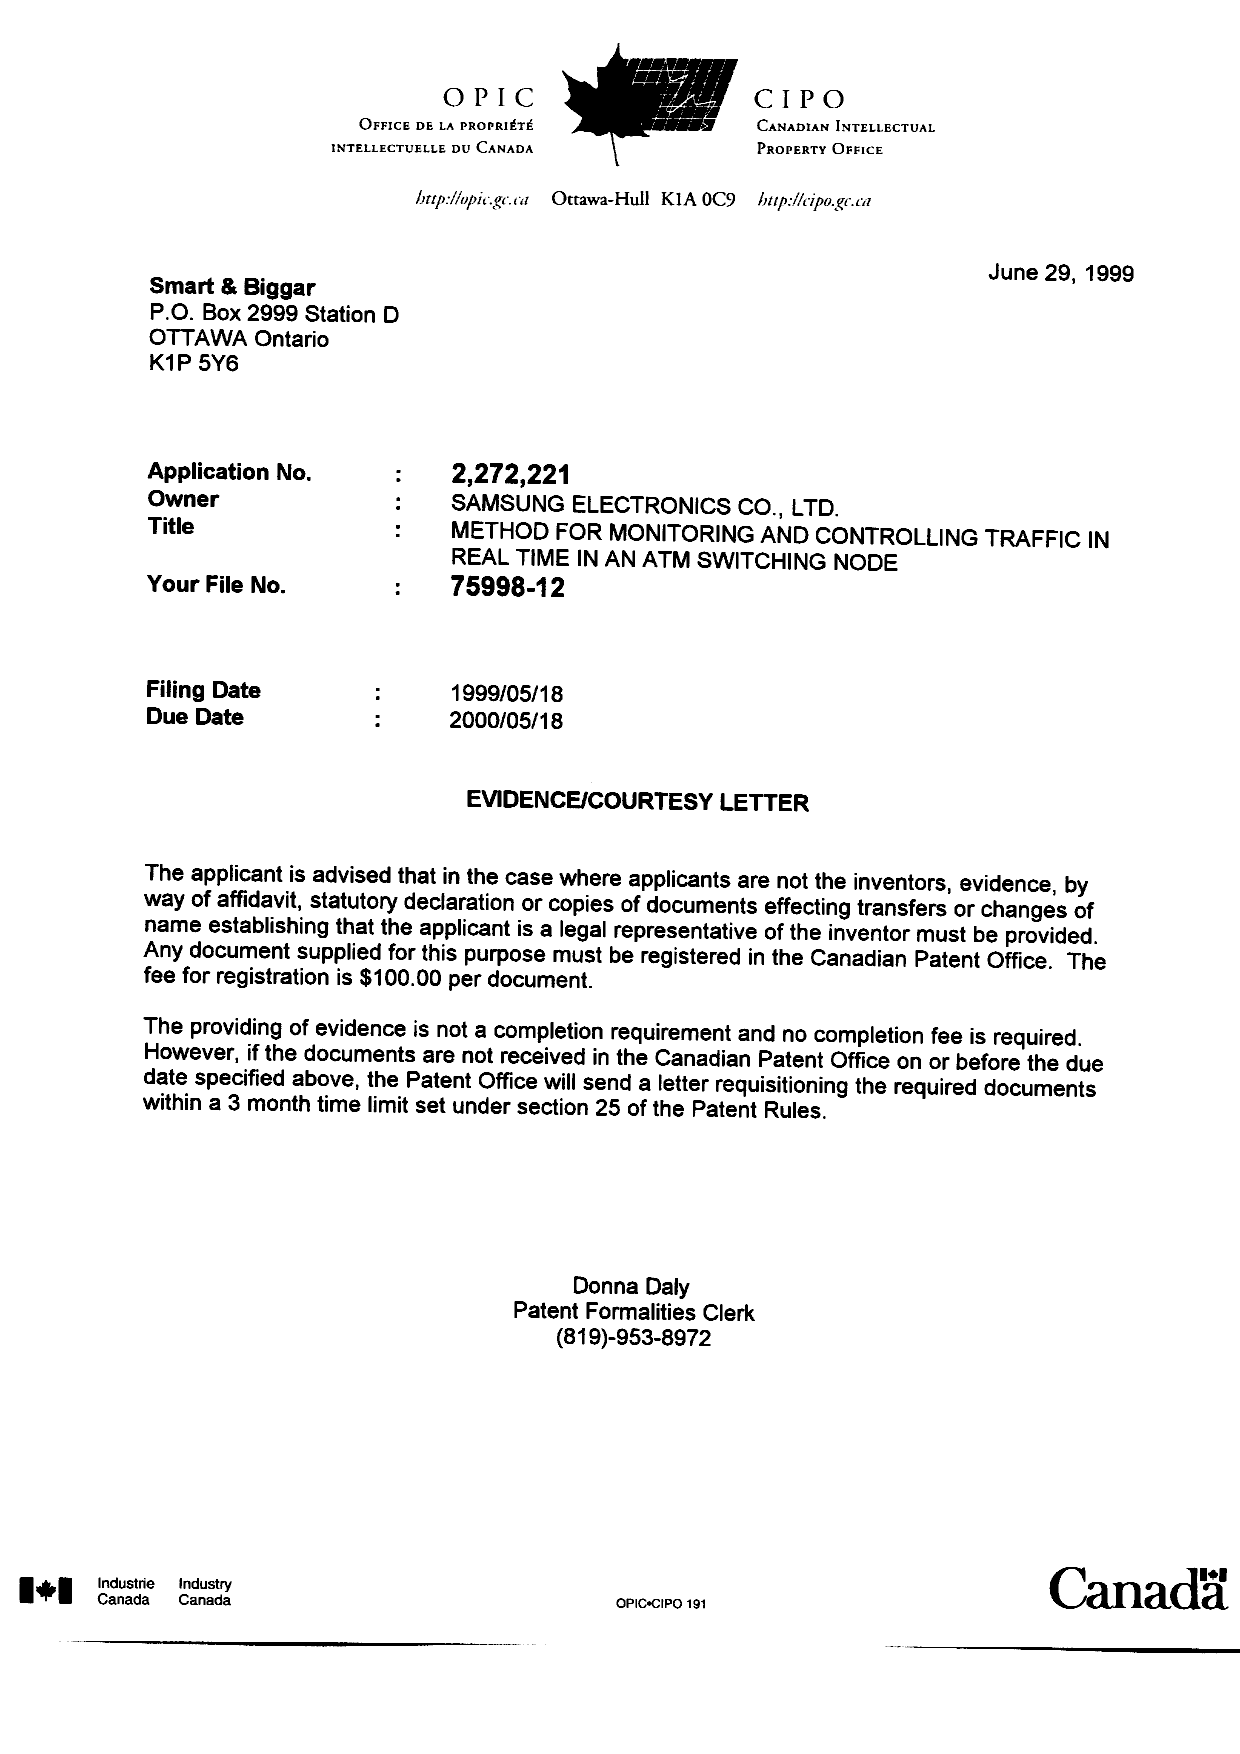 Canadian Patent Document 2272221. Correspondence 19990623. Image 1 of 1